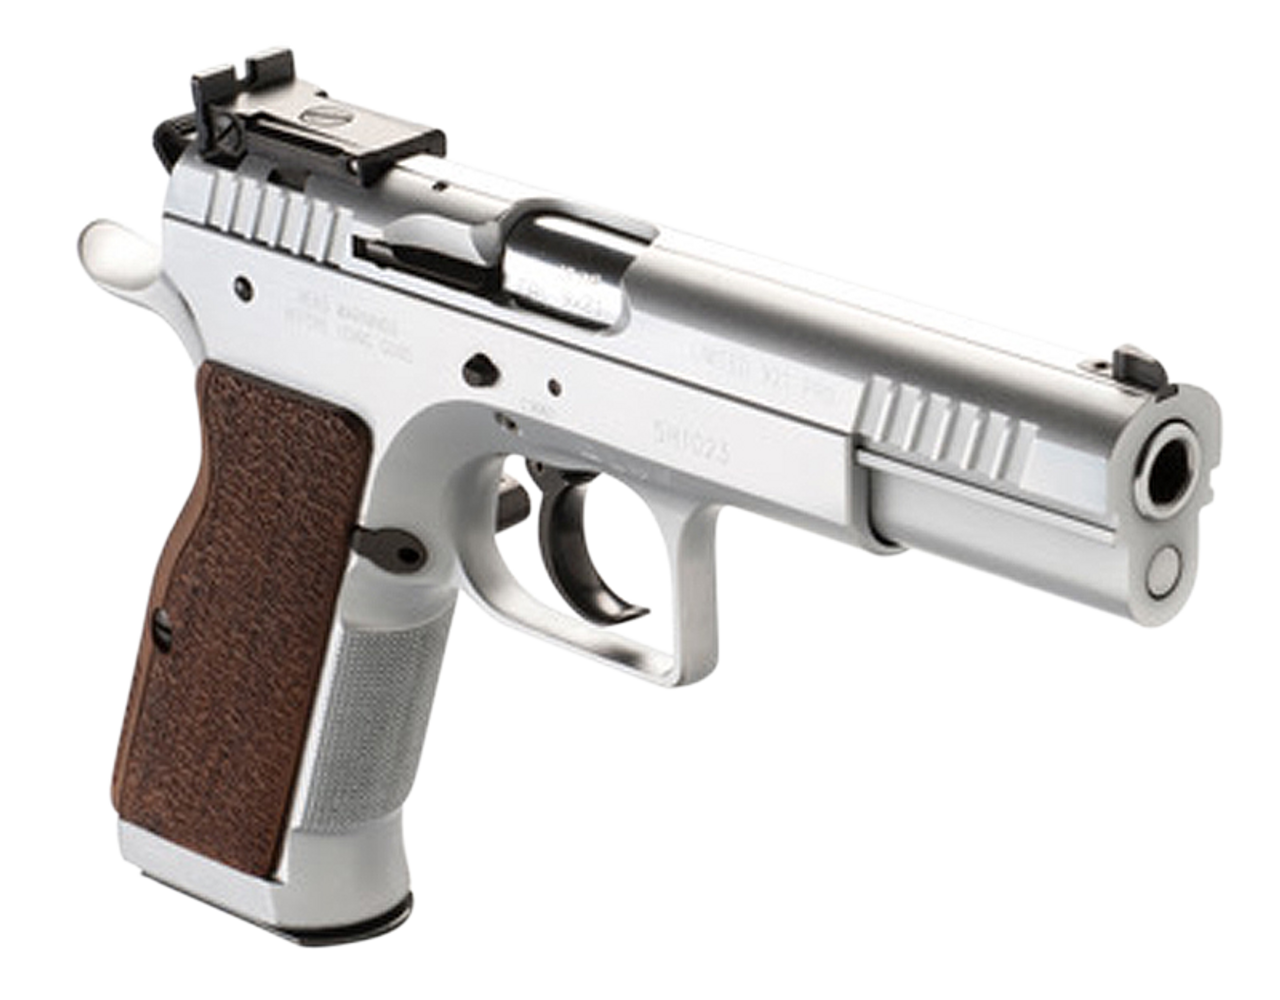 Italian Firearms Group Limited Pro Tangfolio Tf Limpro 9 Lmtd Pro 9mm